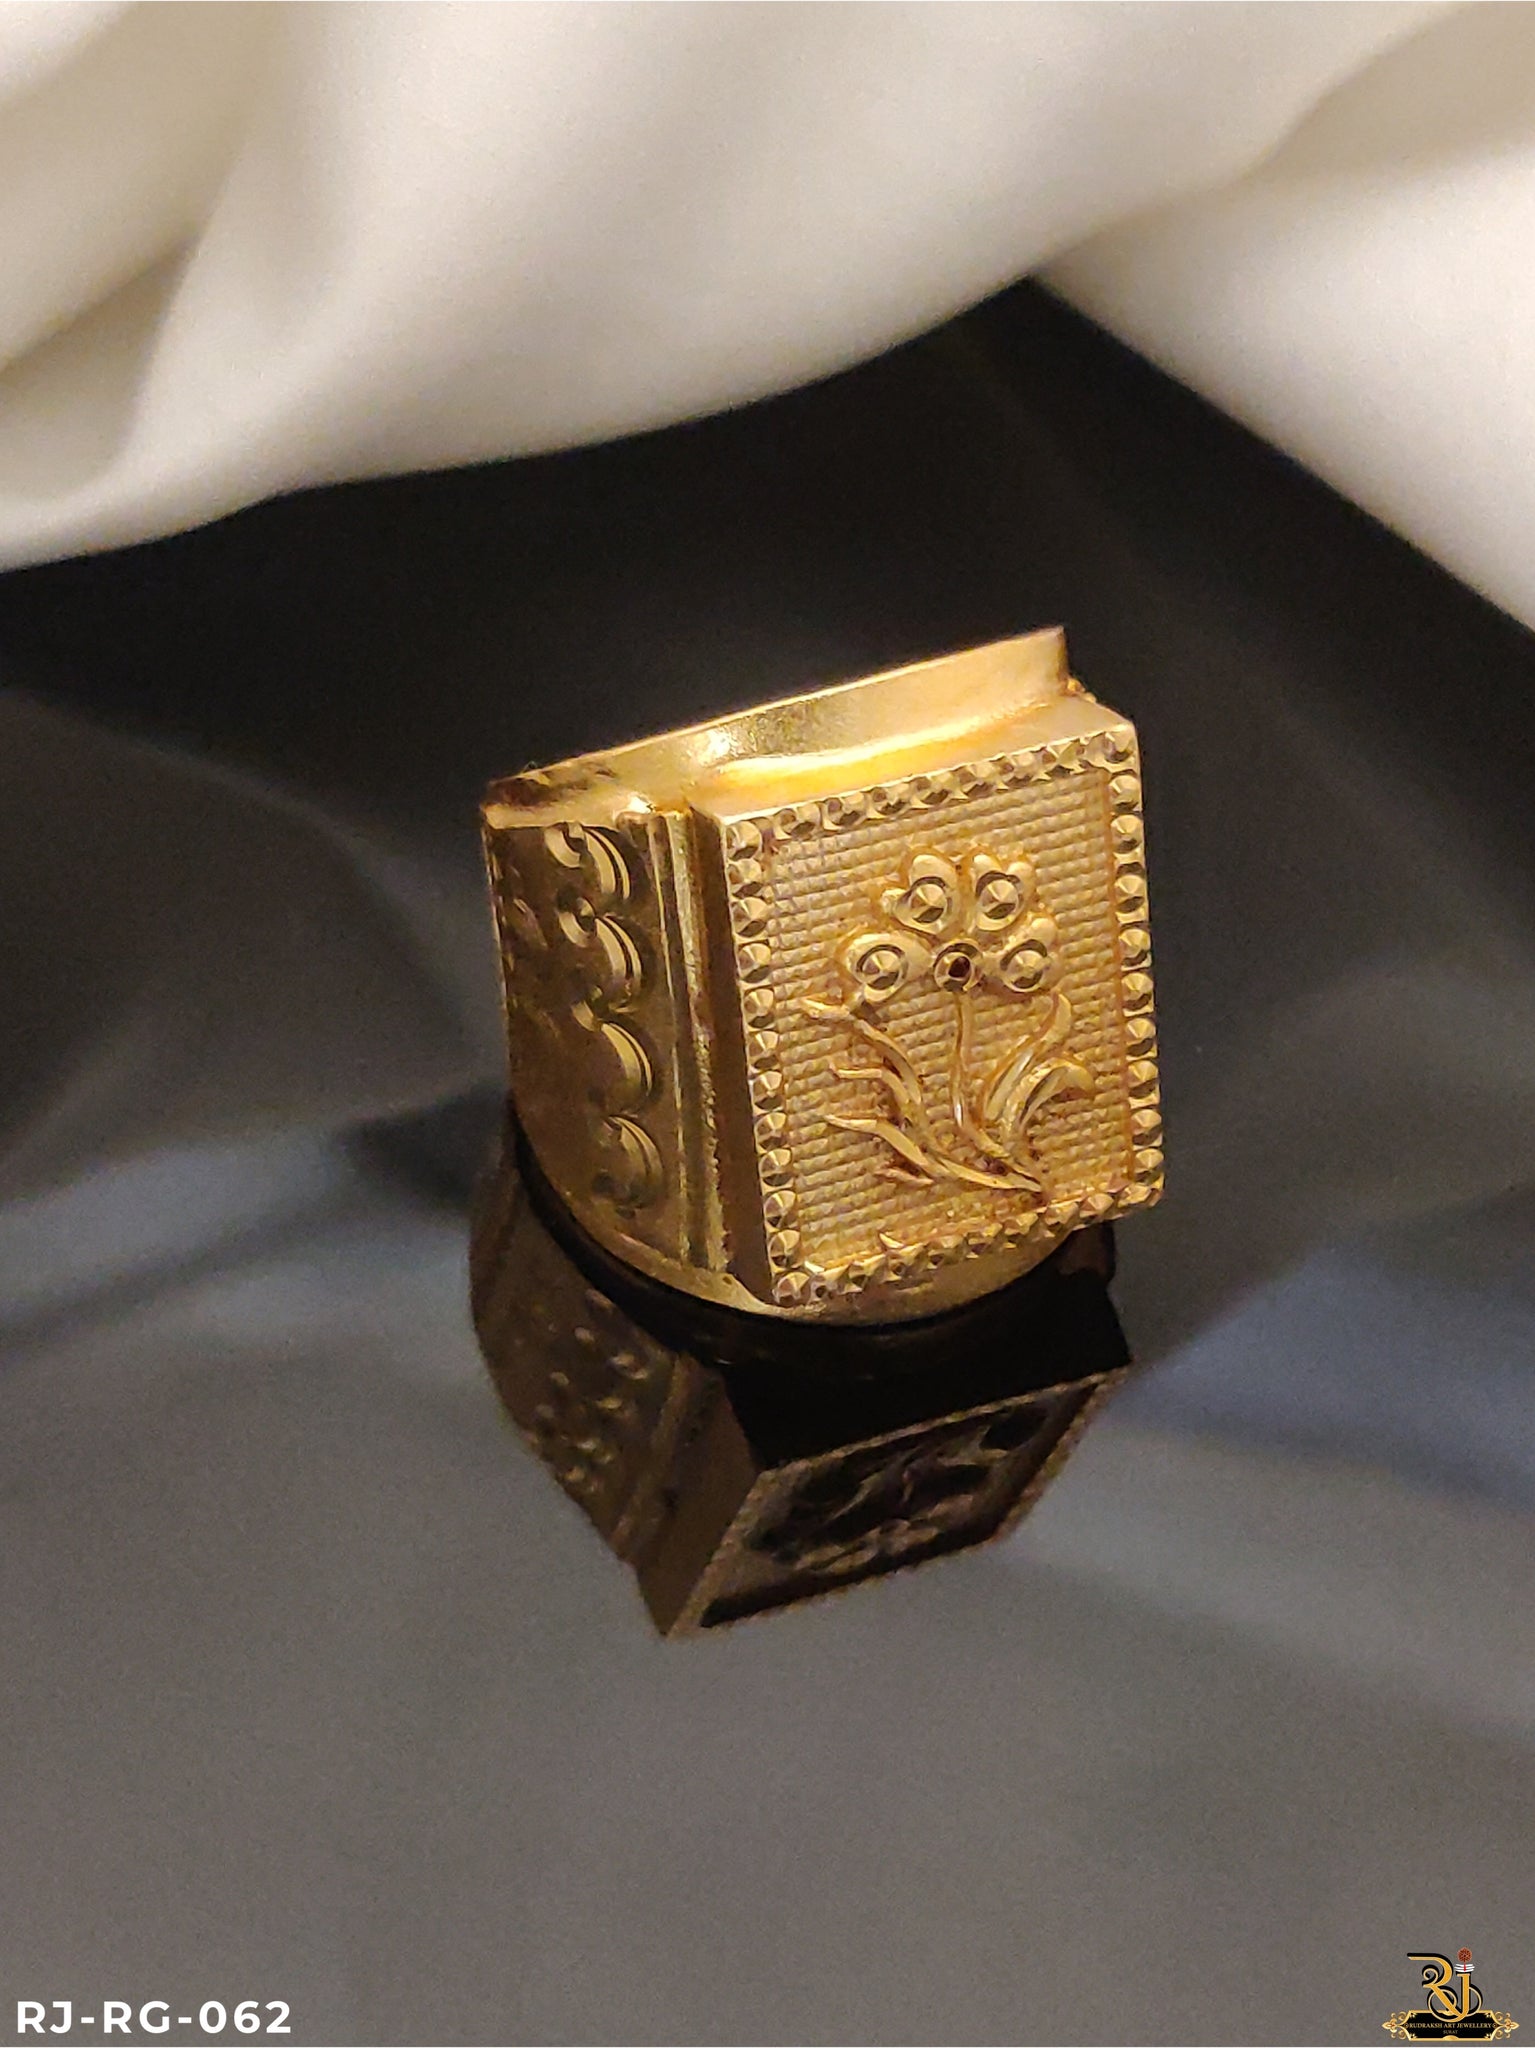 18k Solid Yellow Gold 3D Flower Ring, Diamond Cut, 3.55 Grams. Sz 6.25 |  eBay